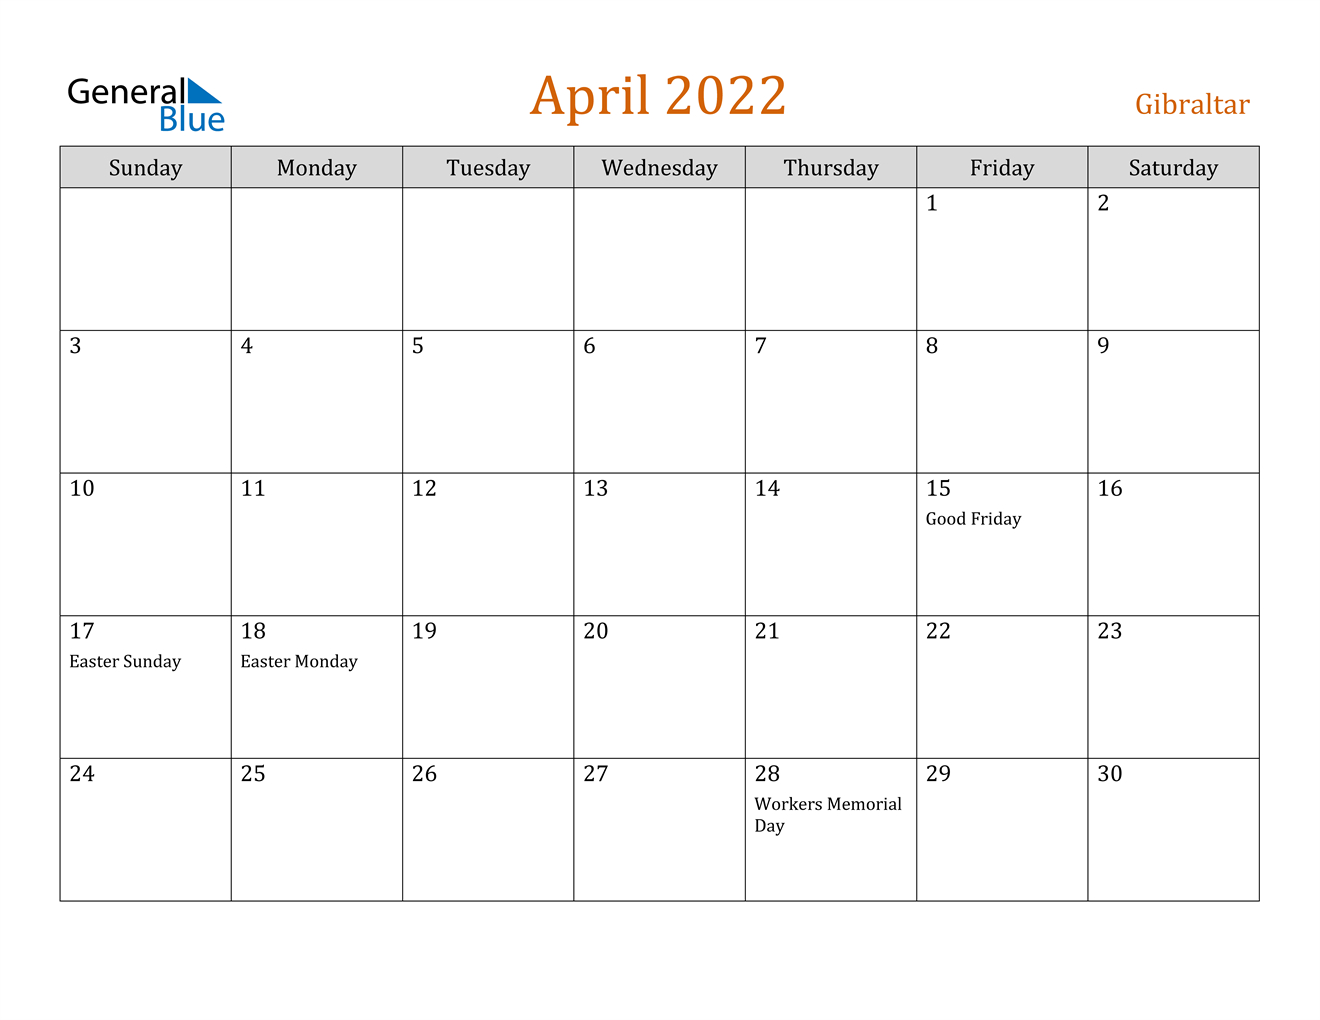 April 2022 Calendar - Gibraltar